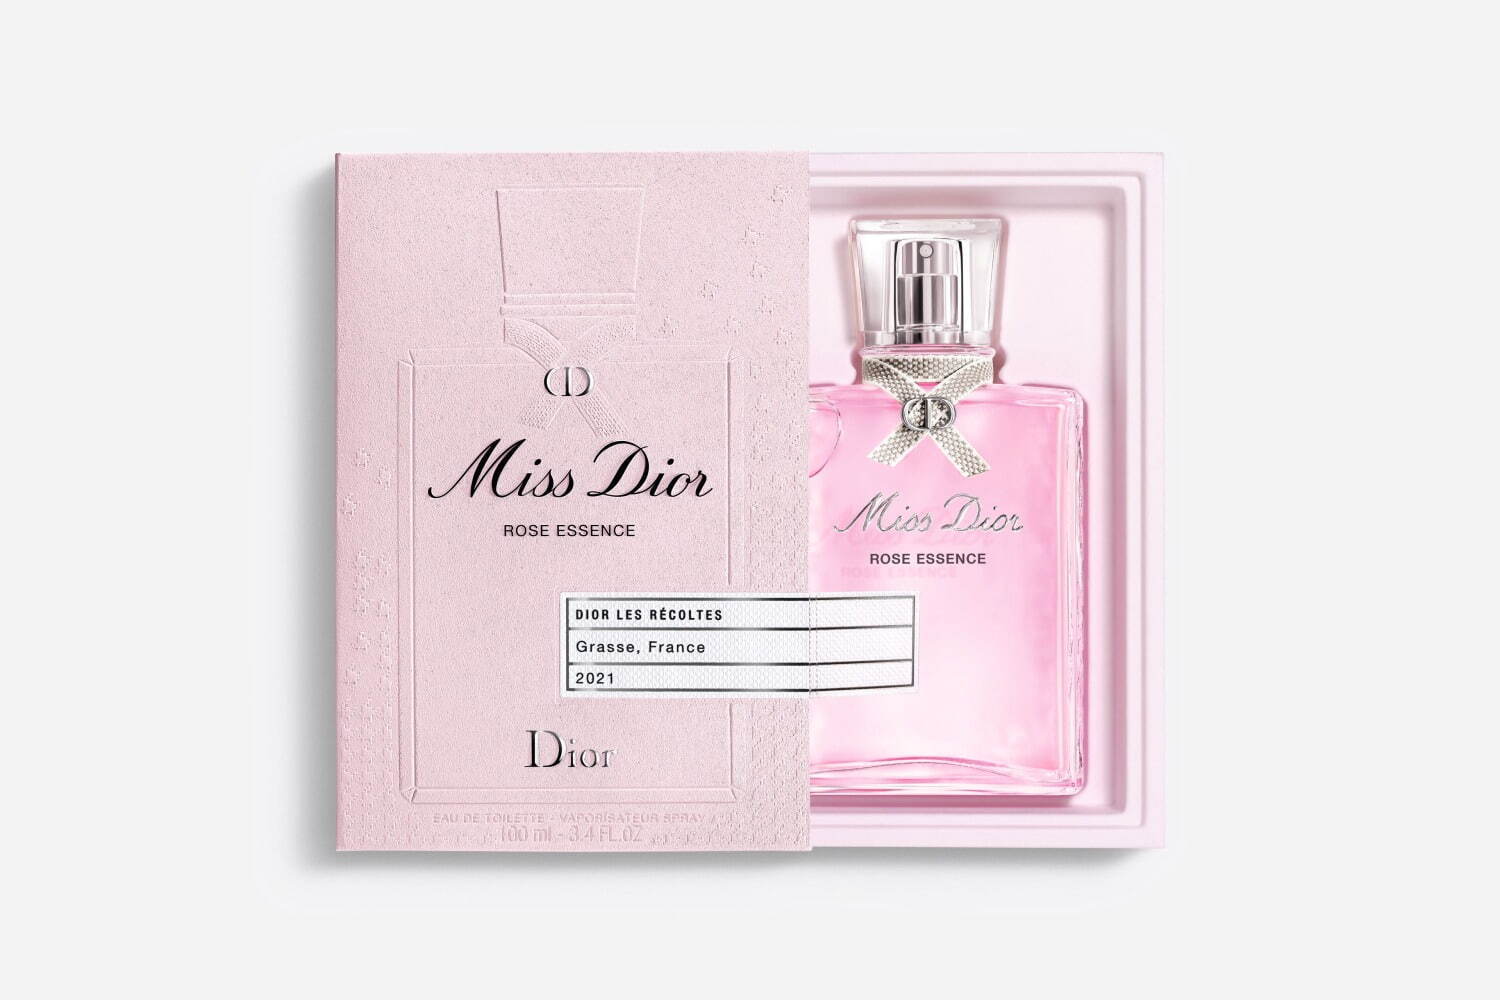 Dior ミスディオール ローズエッセンス 100ml [限定生産品] - www ...